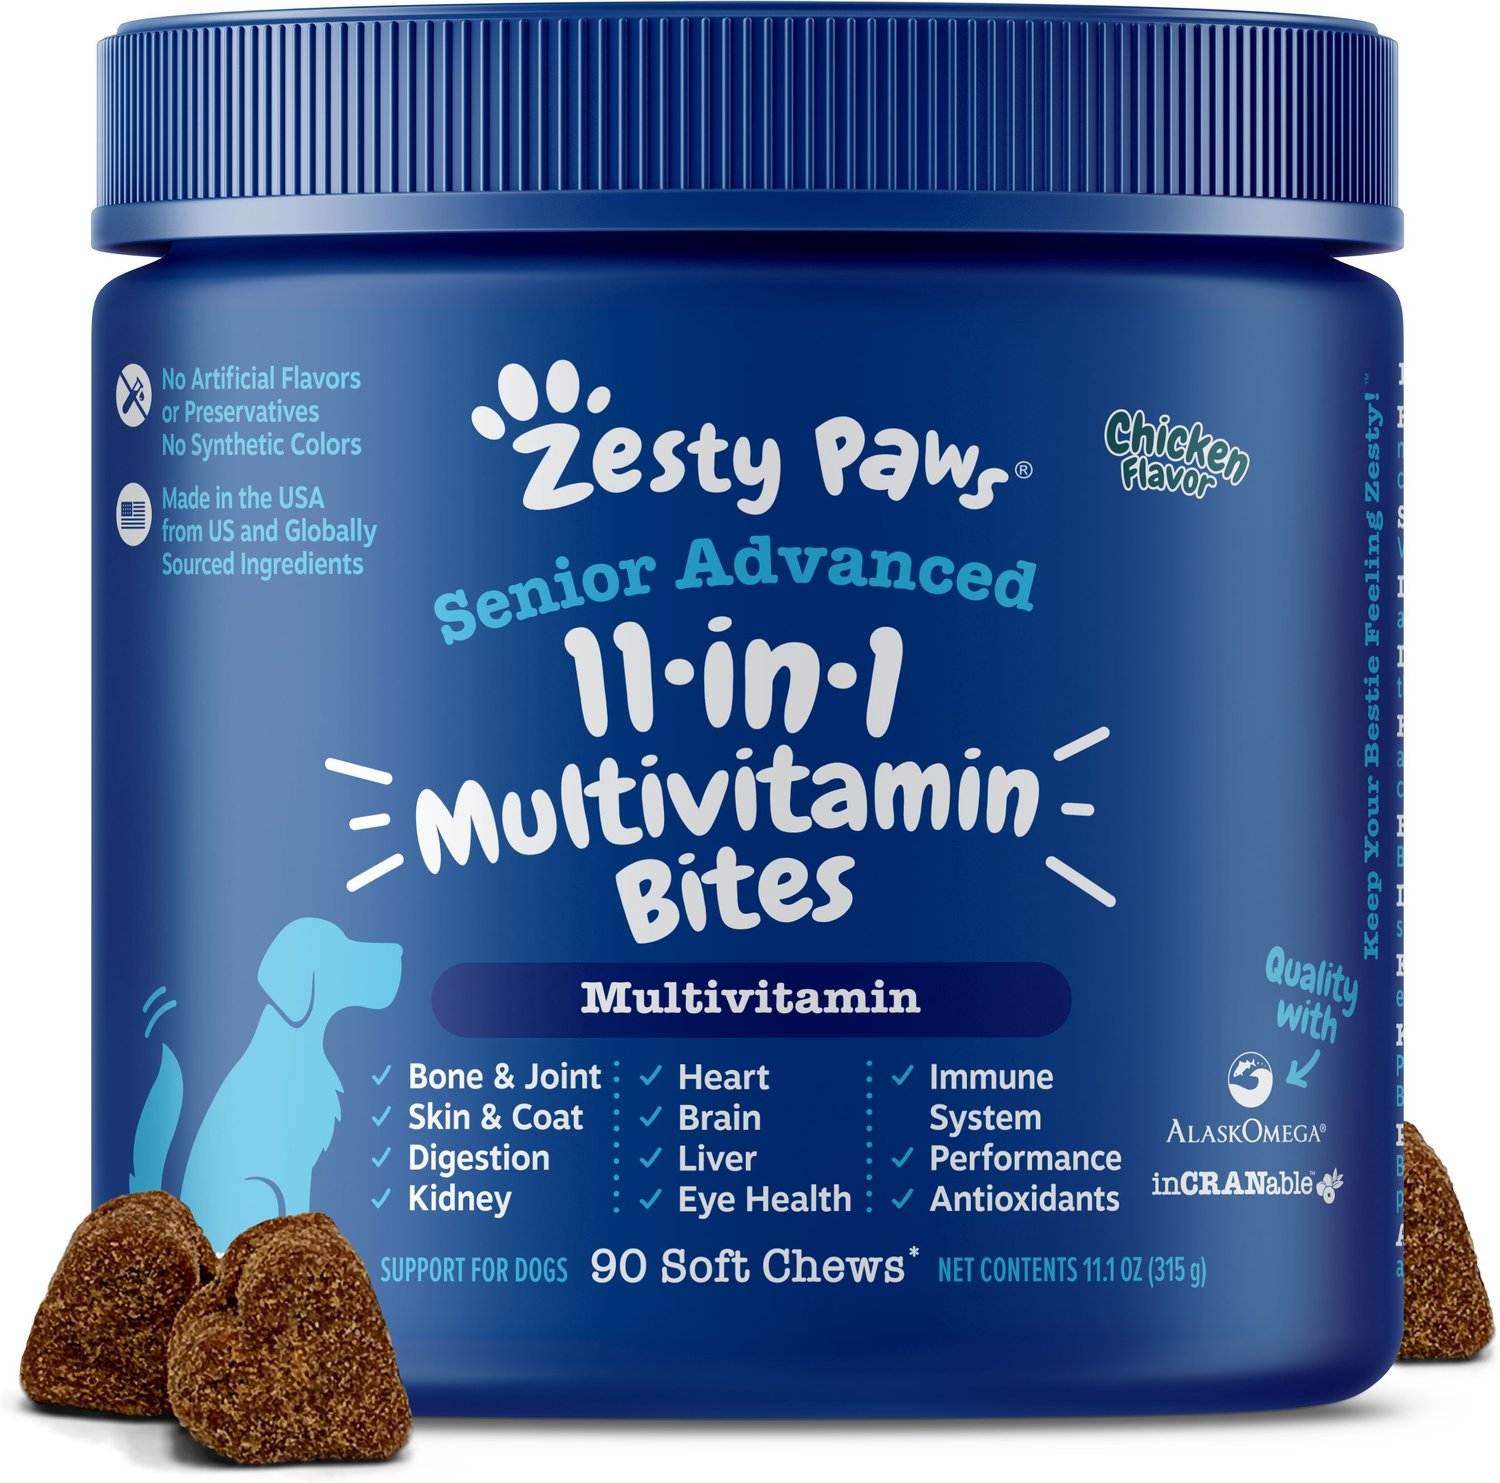 zesty paws senior advanced multivitamin for dogs